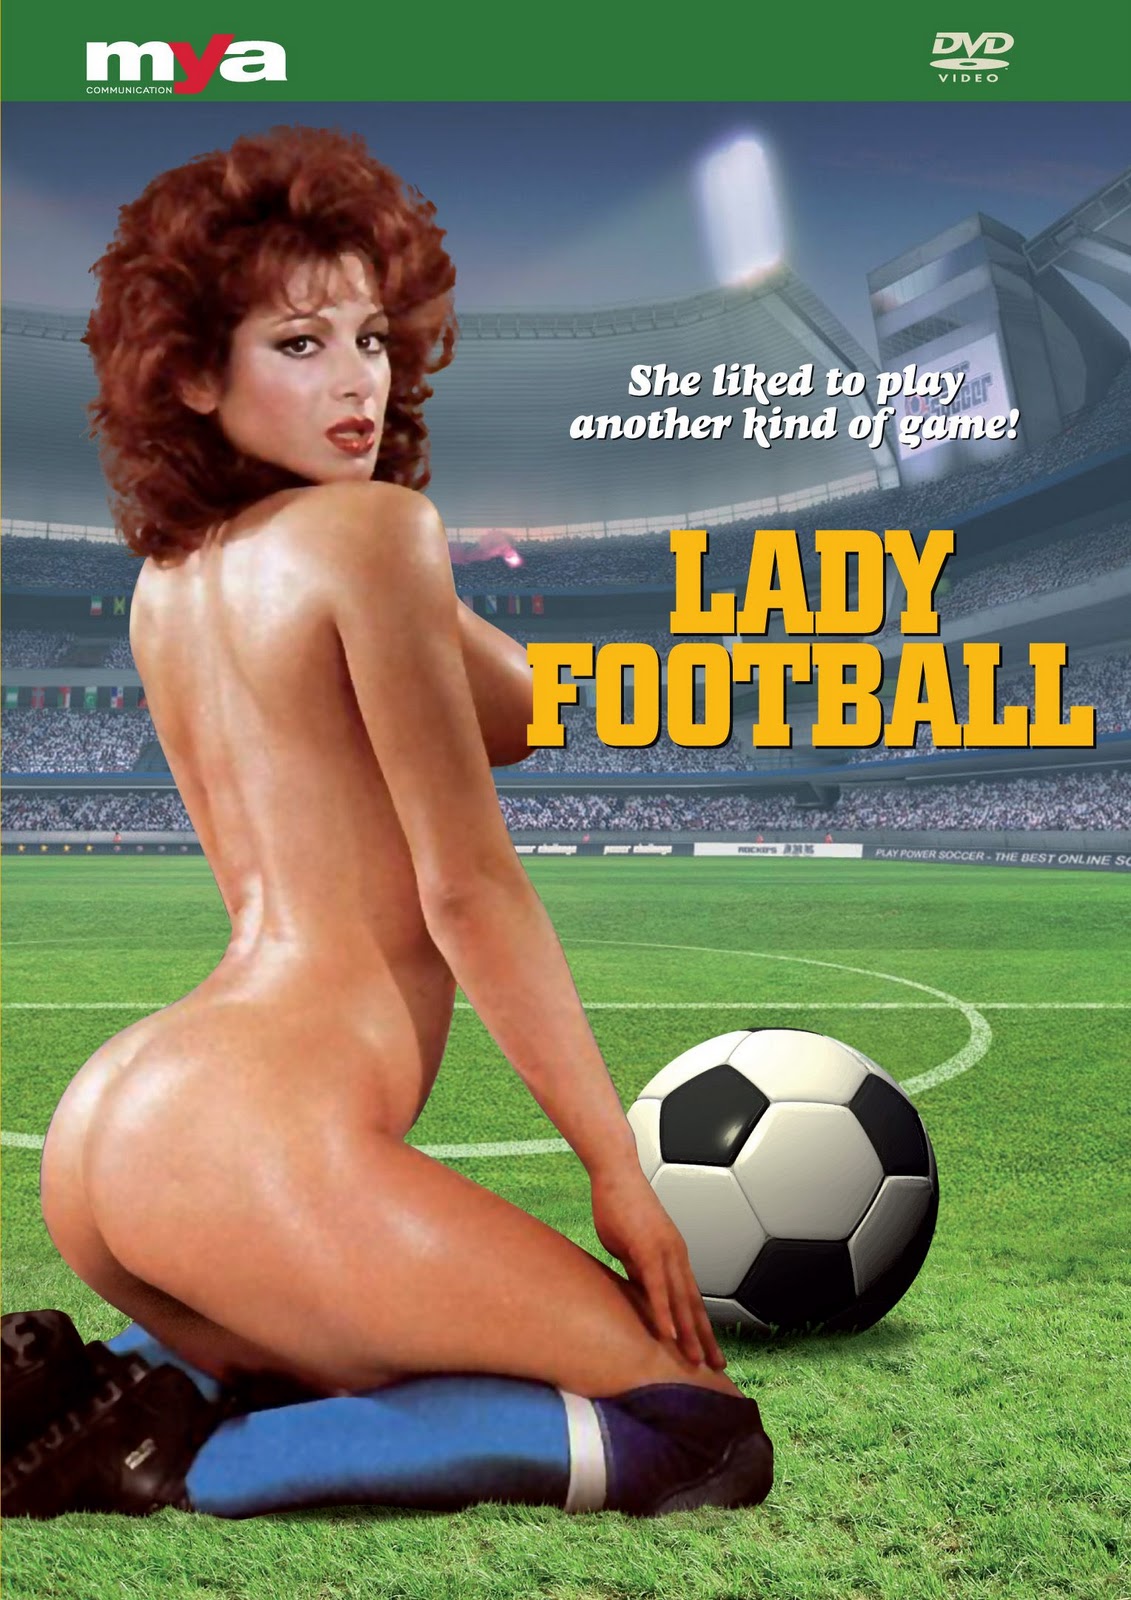 Lady Football (1979) Screenshot 2 